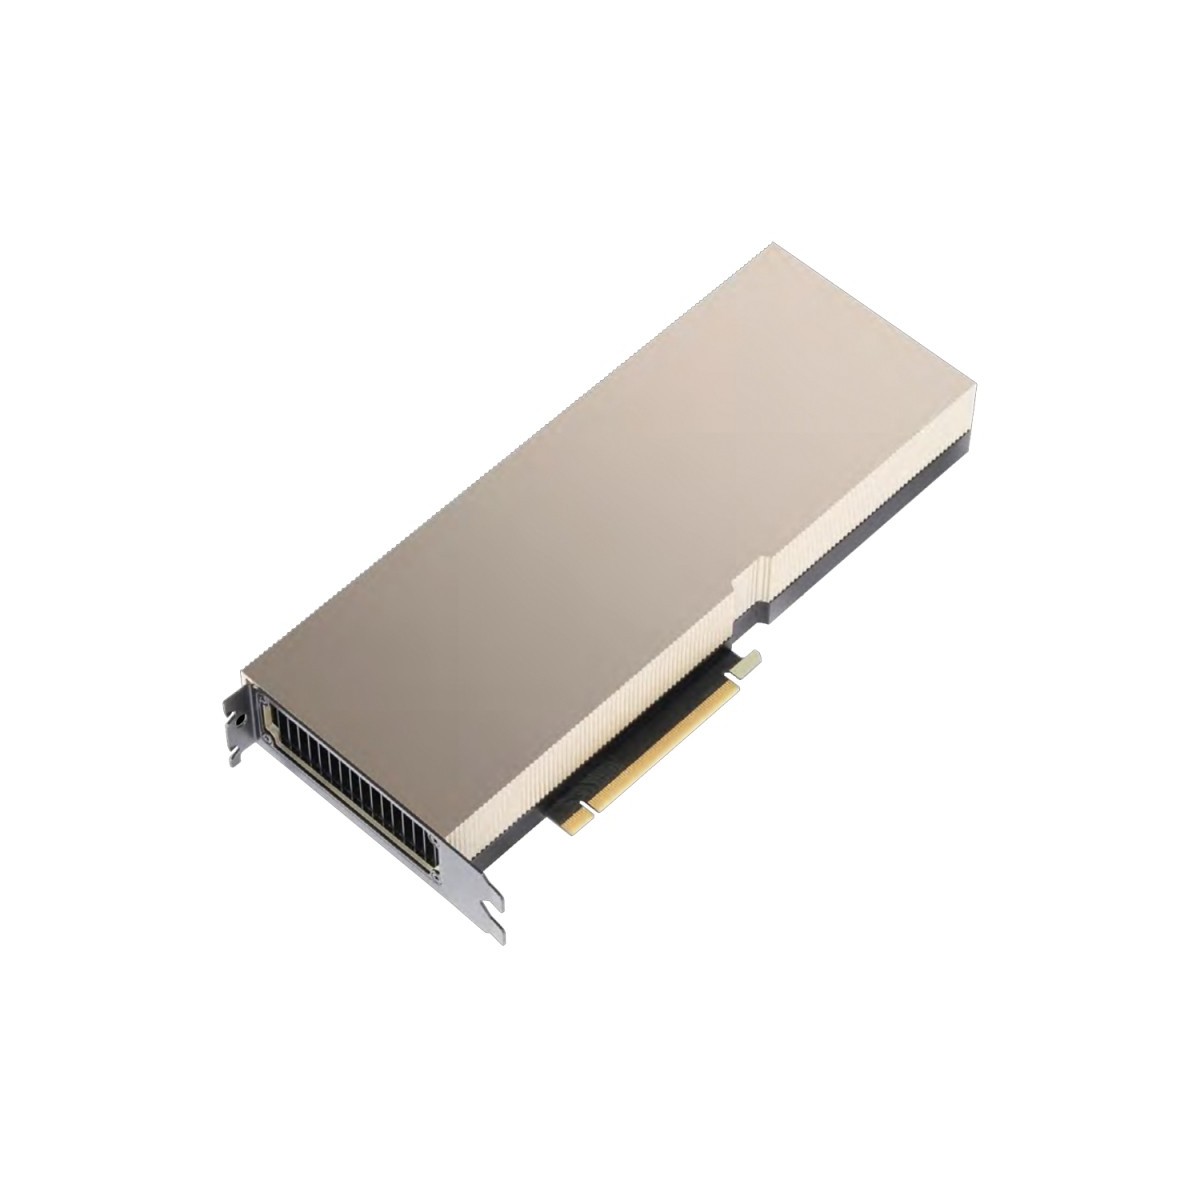 PNY A30 - 24 GB - High Bandwidth Memory 2 (HBM2) - 3072 bit - PCI Express x16 4.0